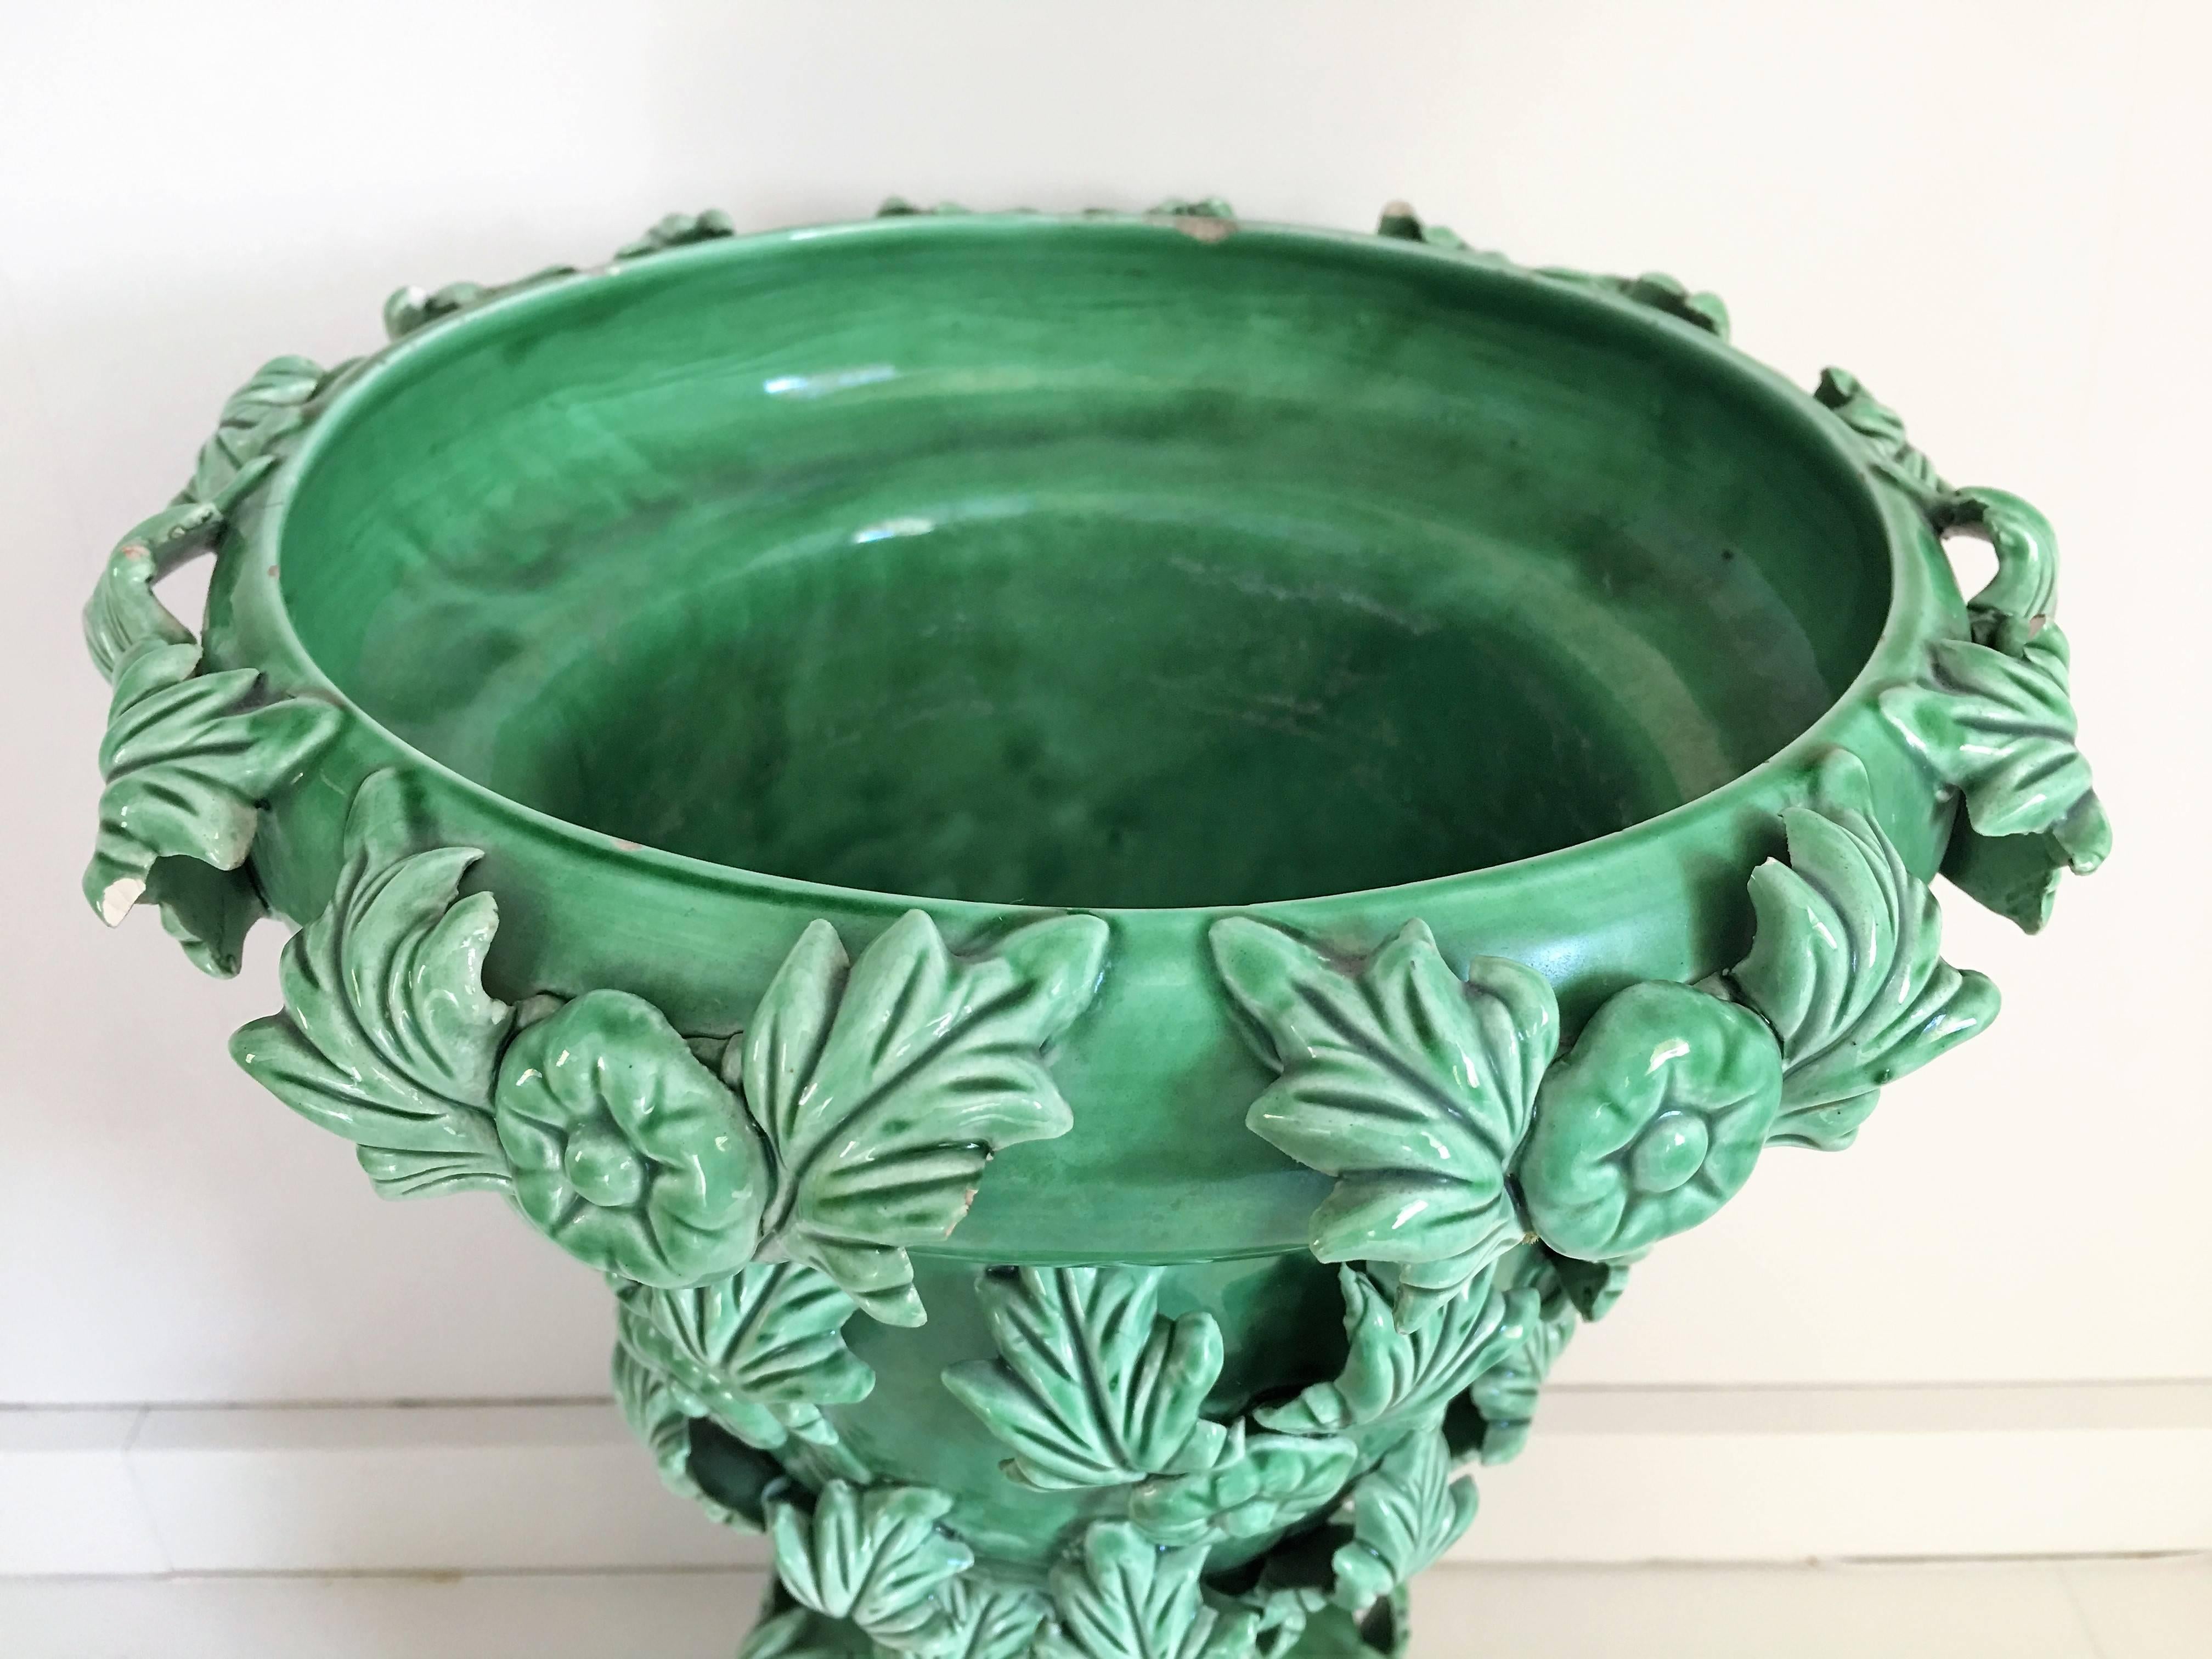 French Art Nouveau Ceramic Planter or Vase circa 1910 For Sale 1